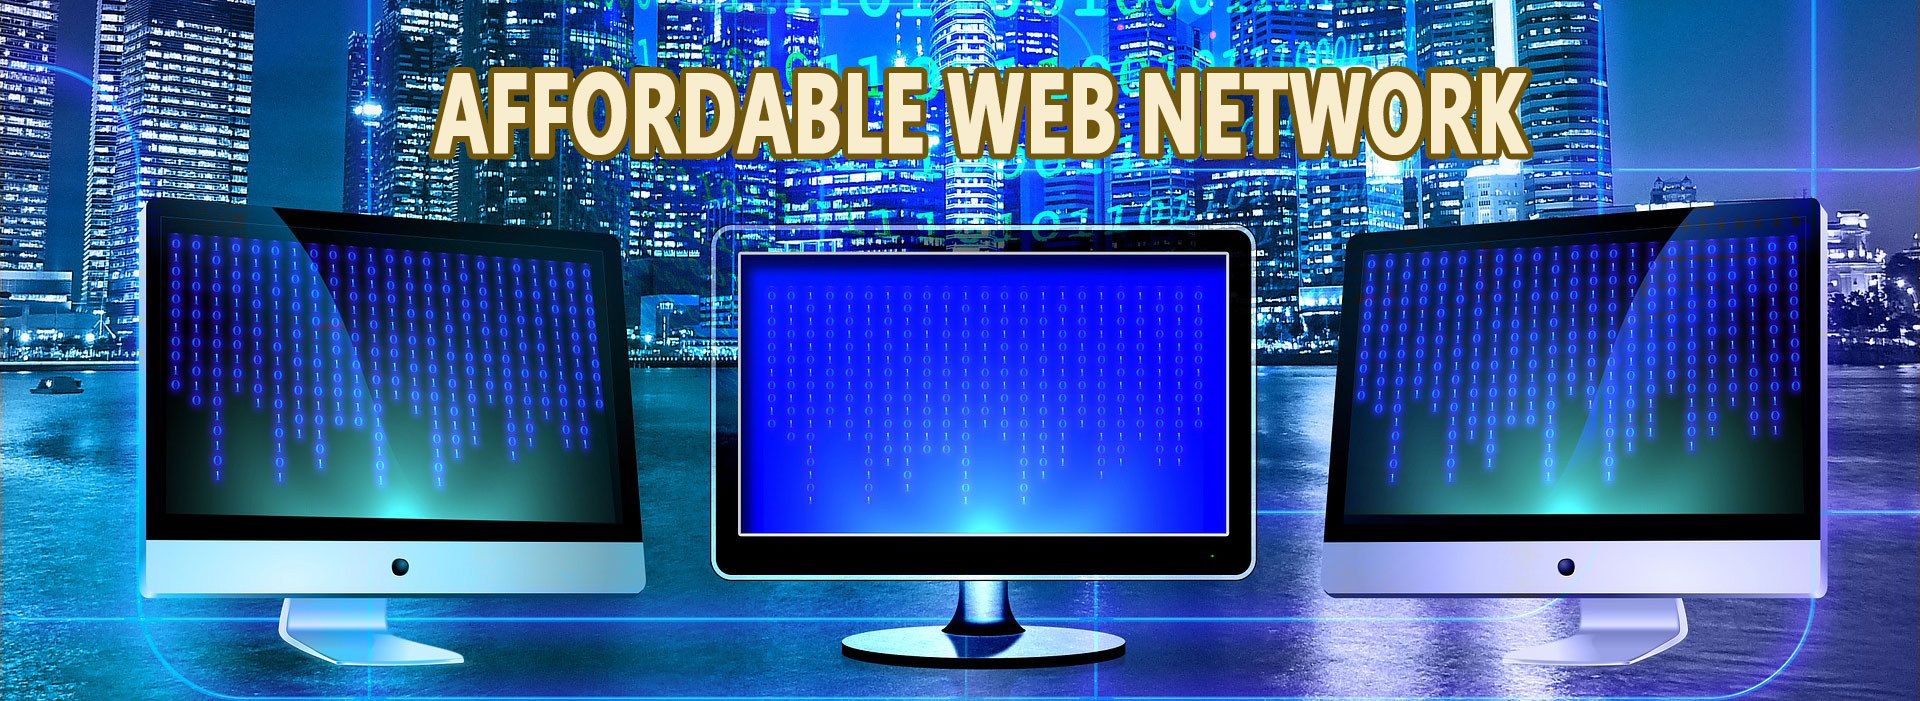 Affordable Web Design Ltd - web design and development since 1996.